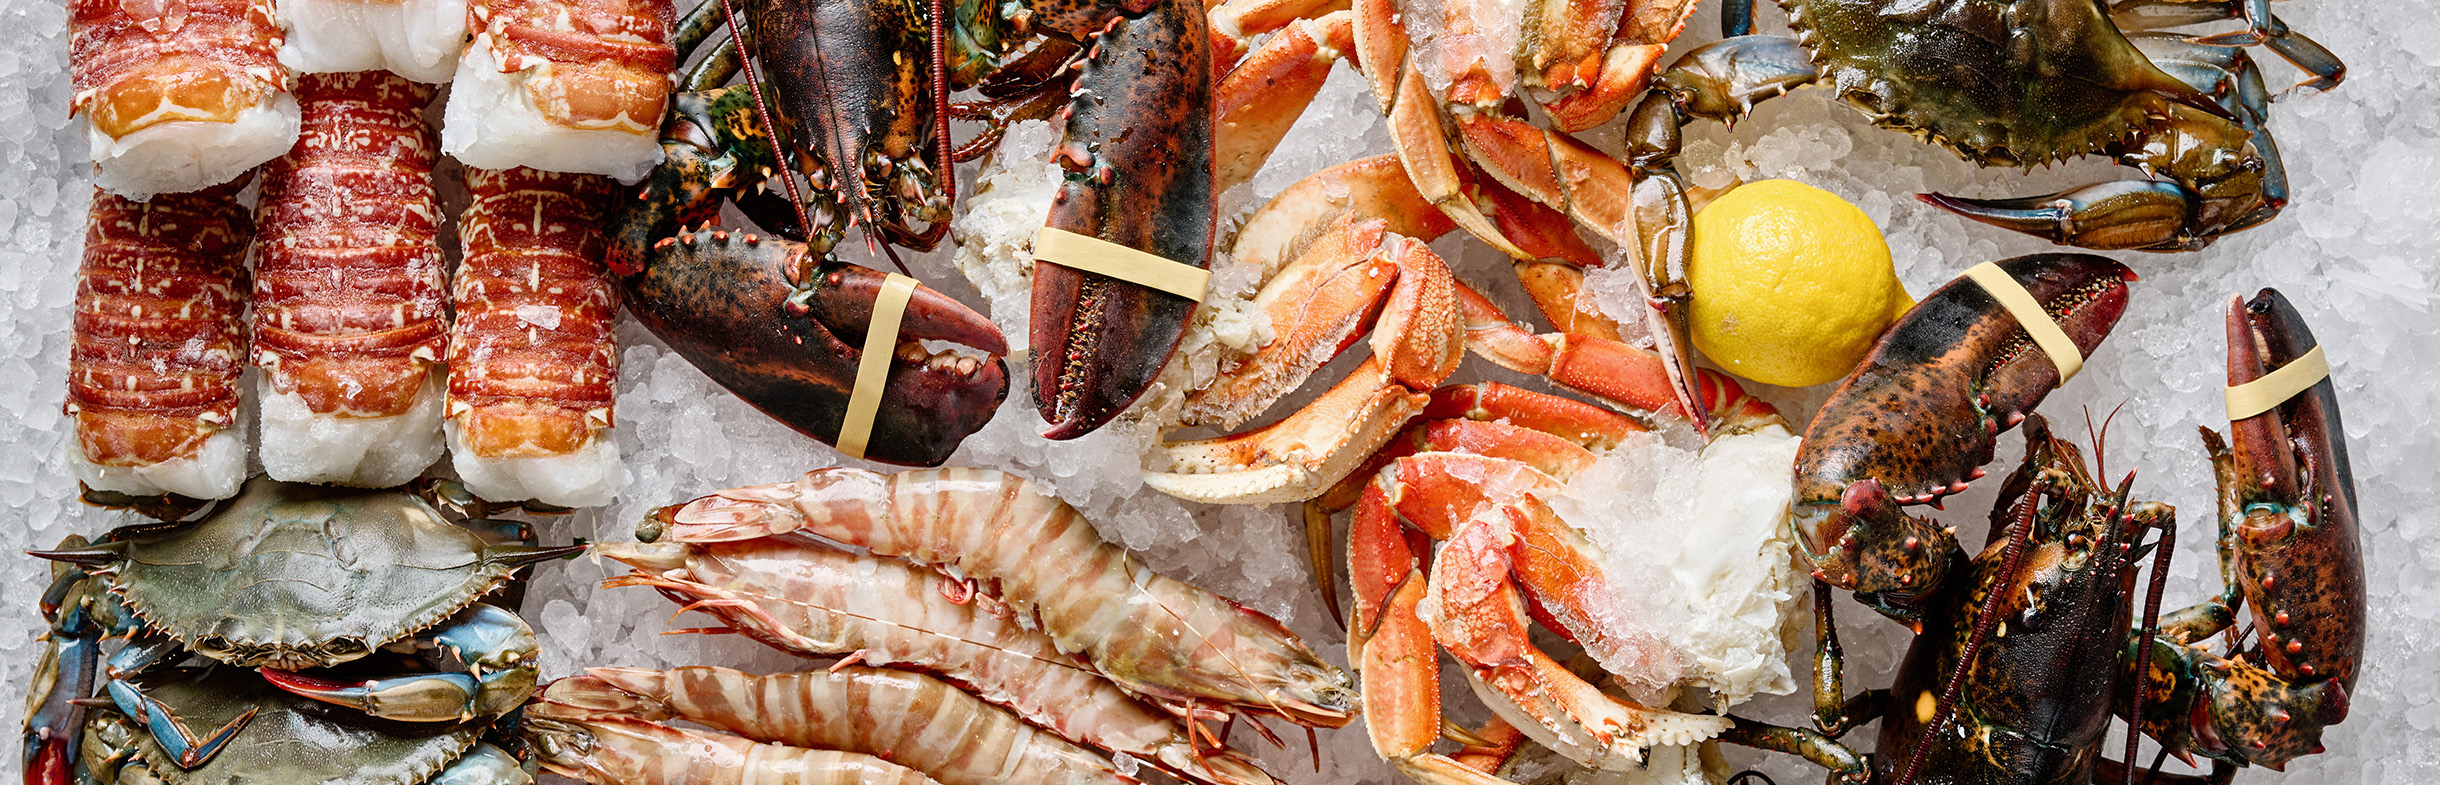 Shoreline Fresh Seafood Market - Photo of fresh, reliably sourced Shellfish Case